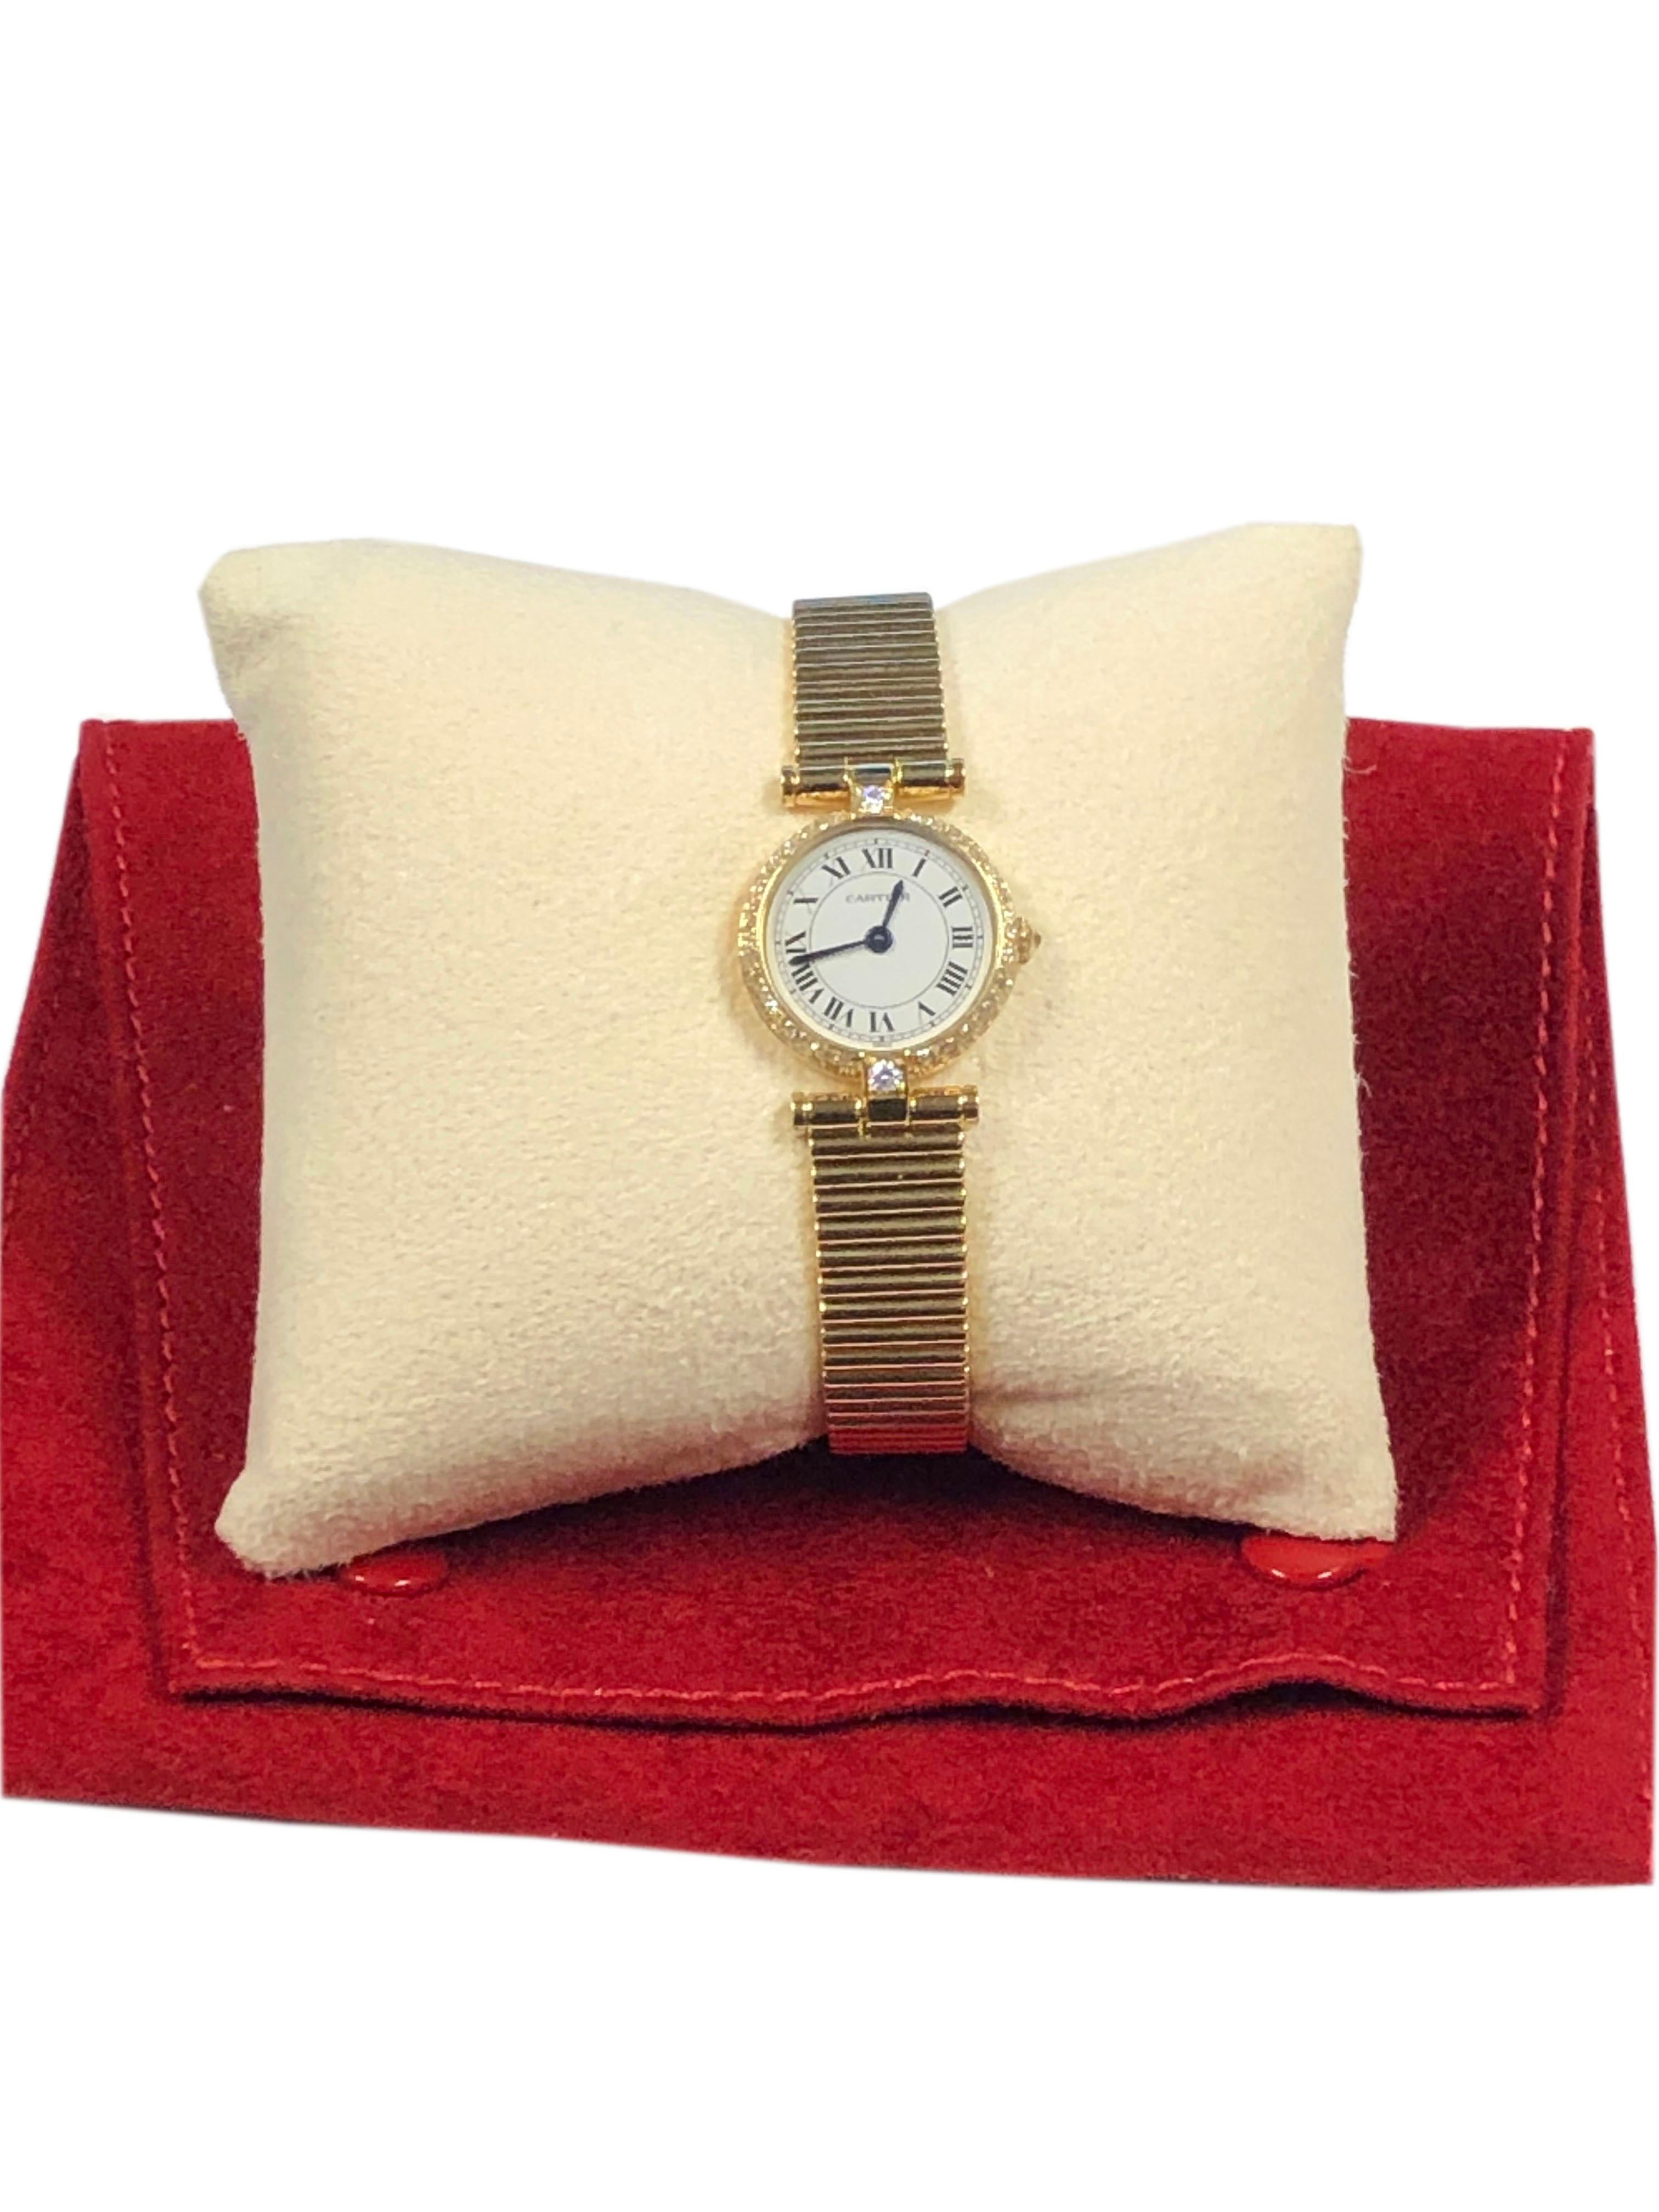 Cartier Vendome Yellow Gold and Diamond Ladies Wrist Watch 2